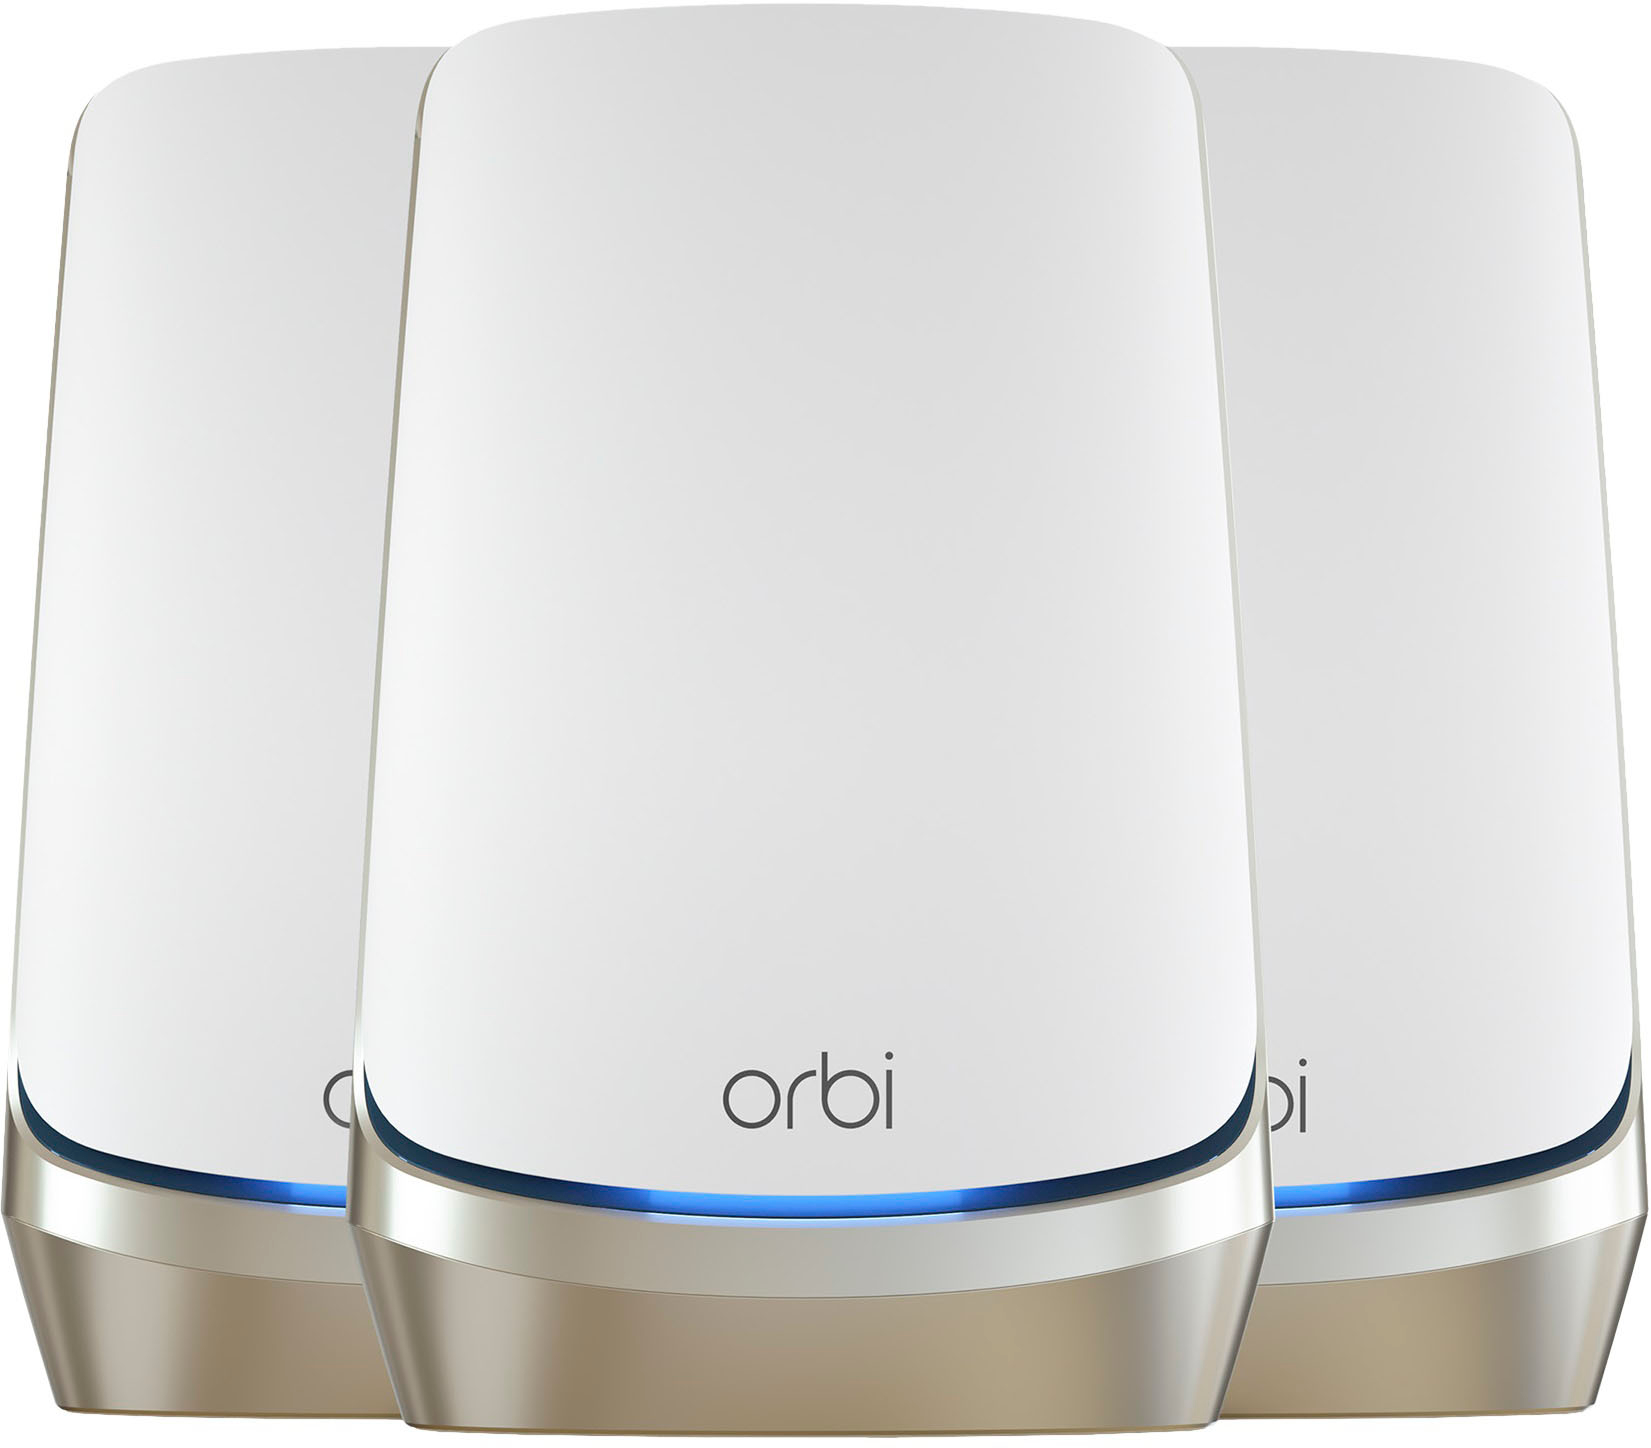 Netgear Wireless Networking - Netgear Orbi Tri-Band Whole Home